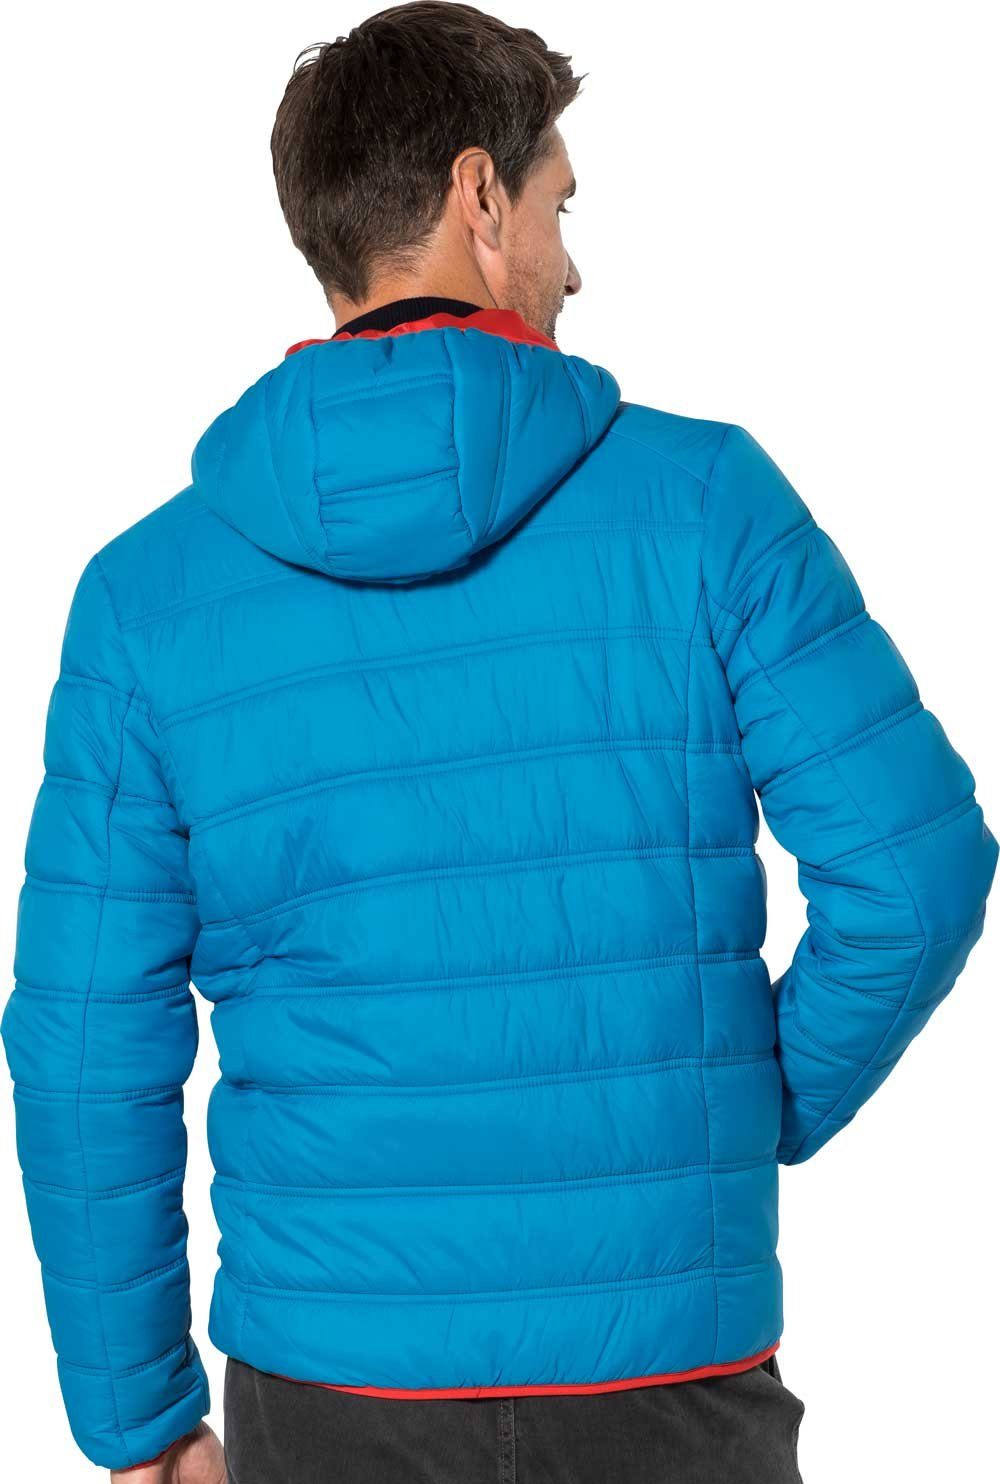 Nordcap Steppjacke ultraleichte Jacke mit blau Kapuze